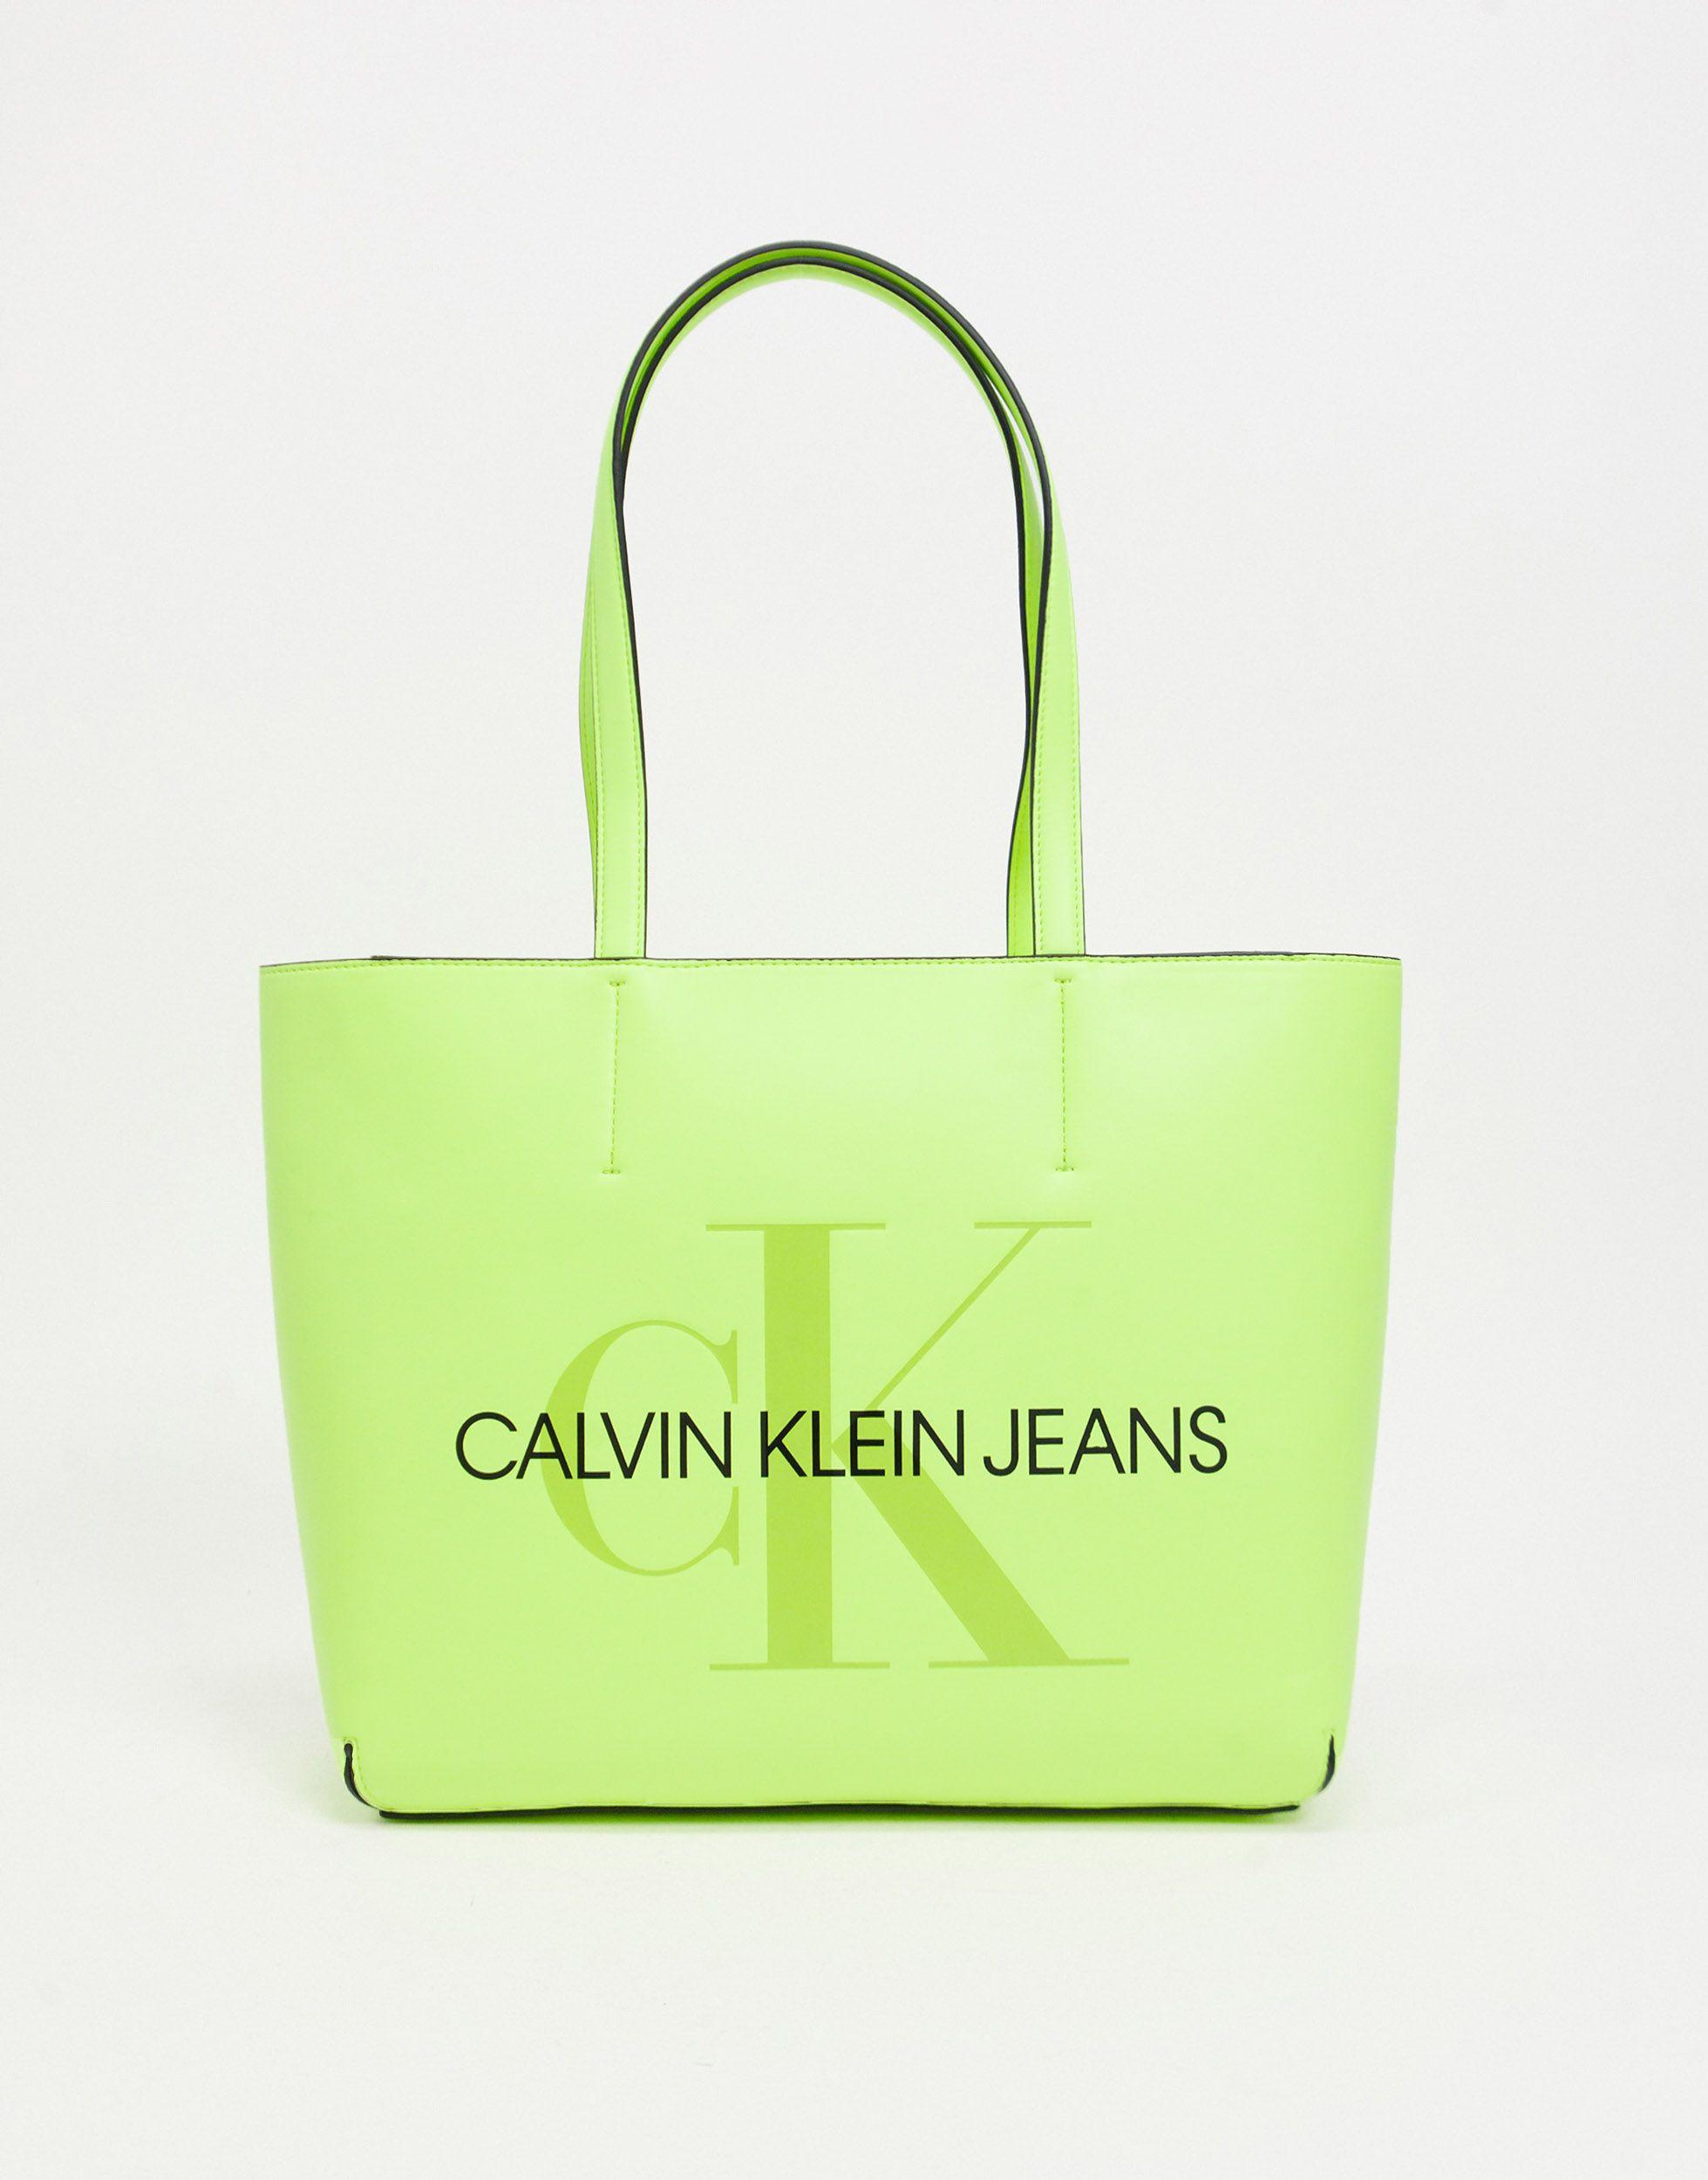 Calvin Klein Jeans Tote Bag Store, 51% OFF | www.bridgepartnersllc.com